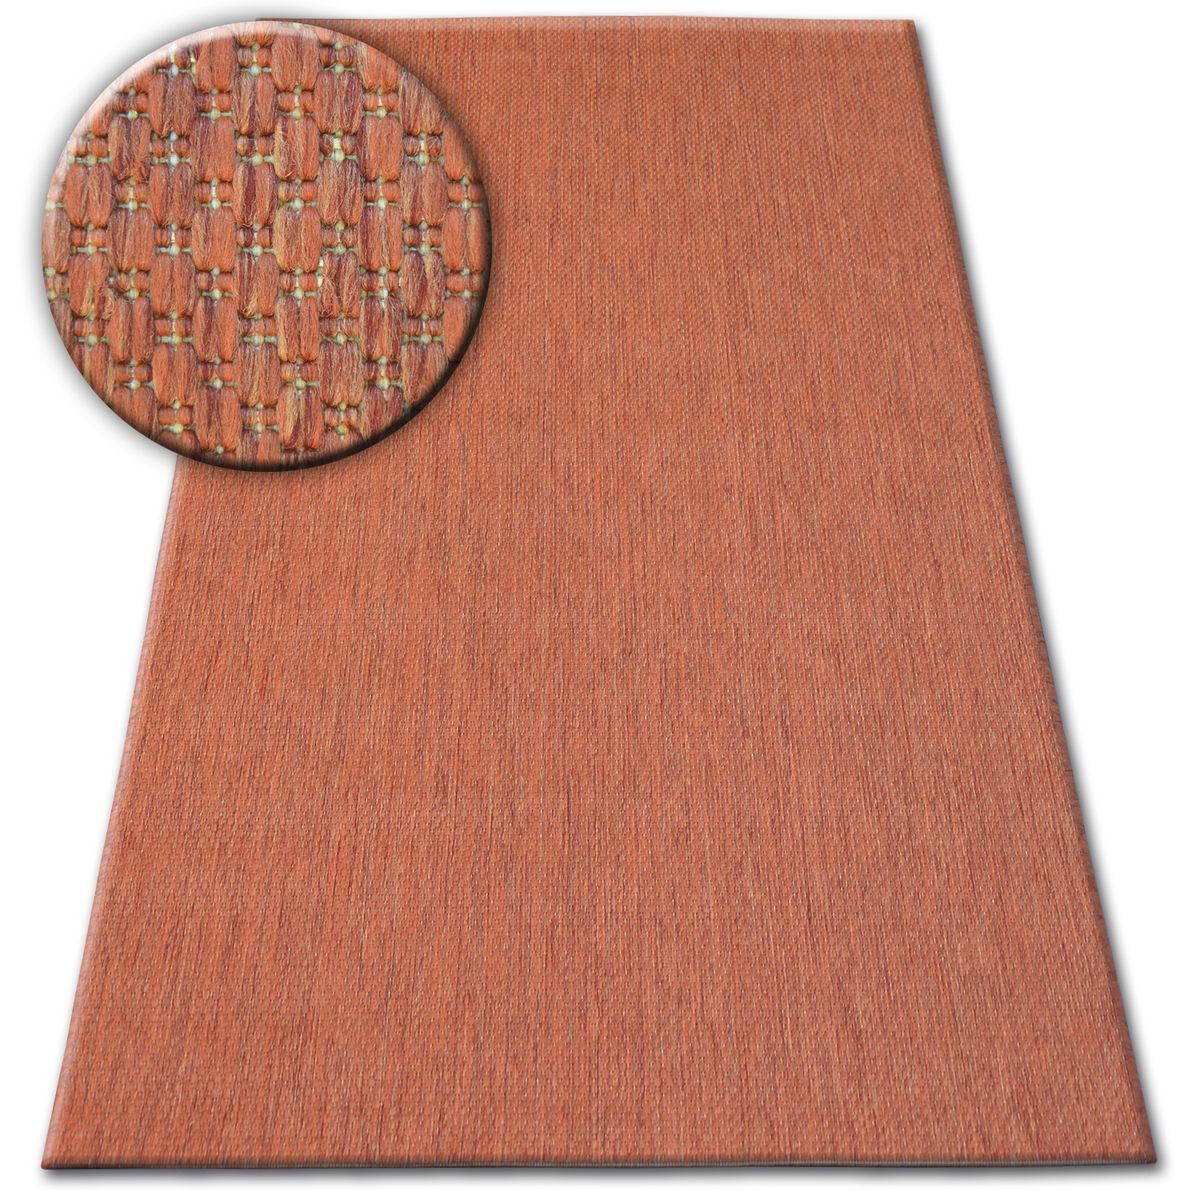 Cika Single Coloured Rug Terracotta, 80x150 cm - image 1